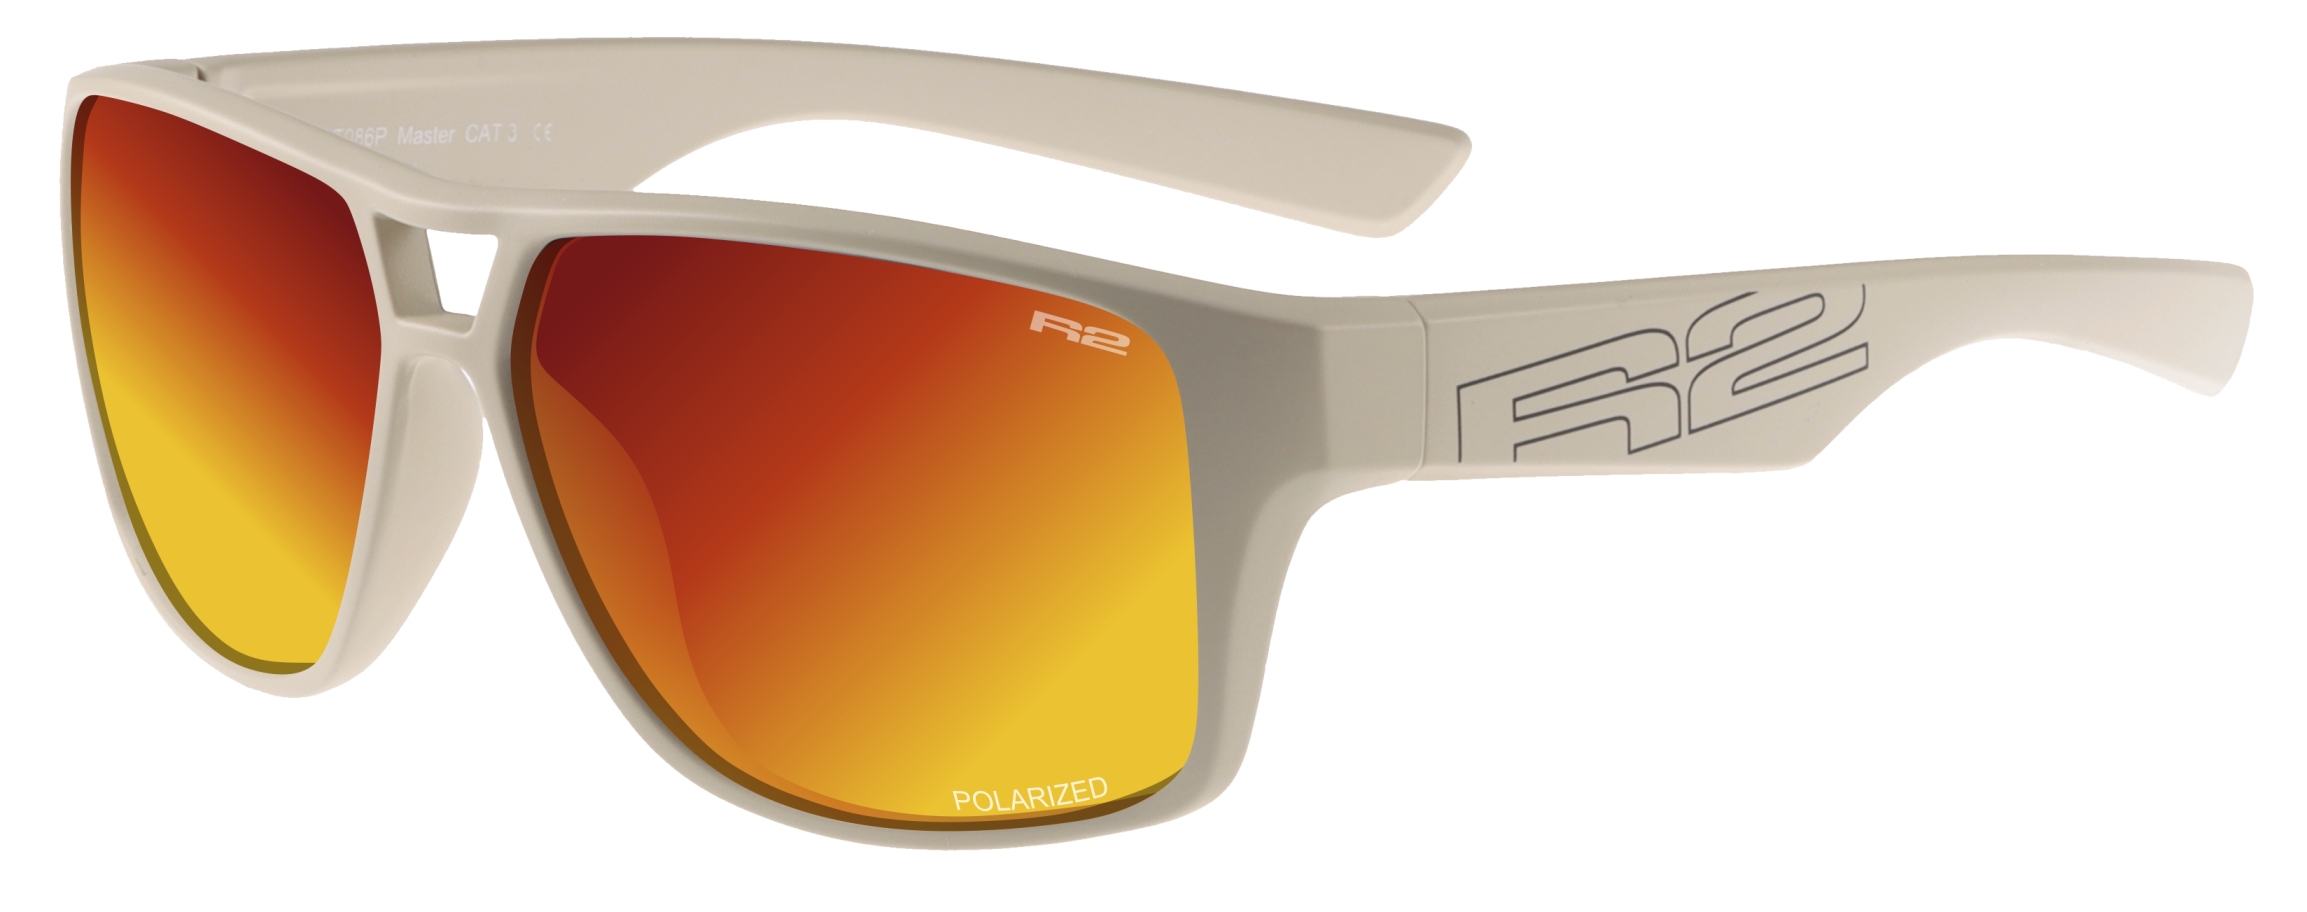 Sport sunglasses R2 MASTER AT086P standard